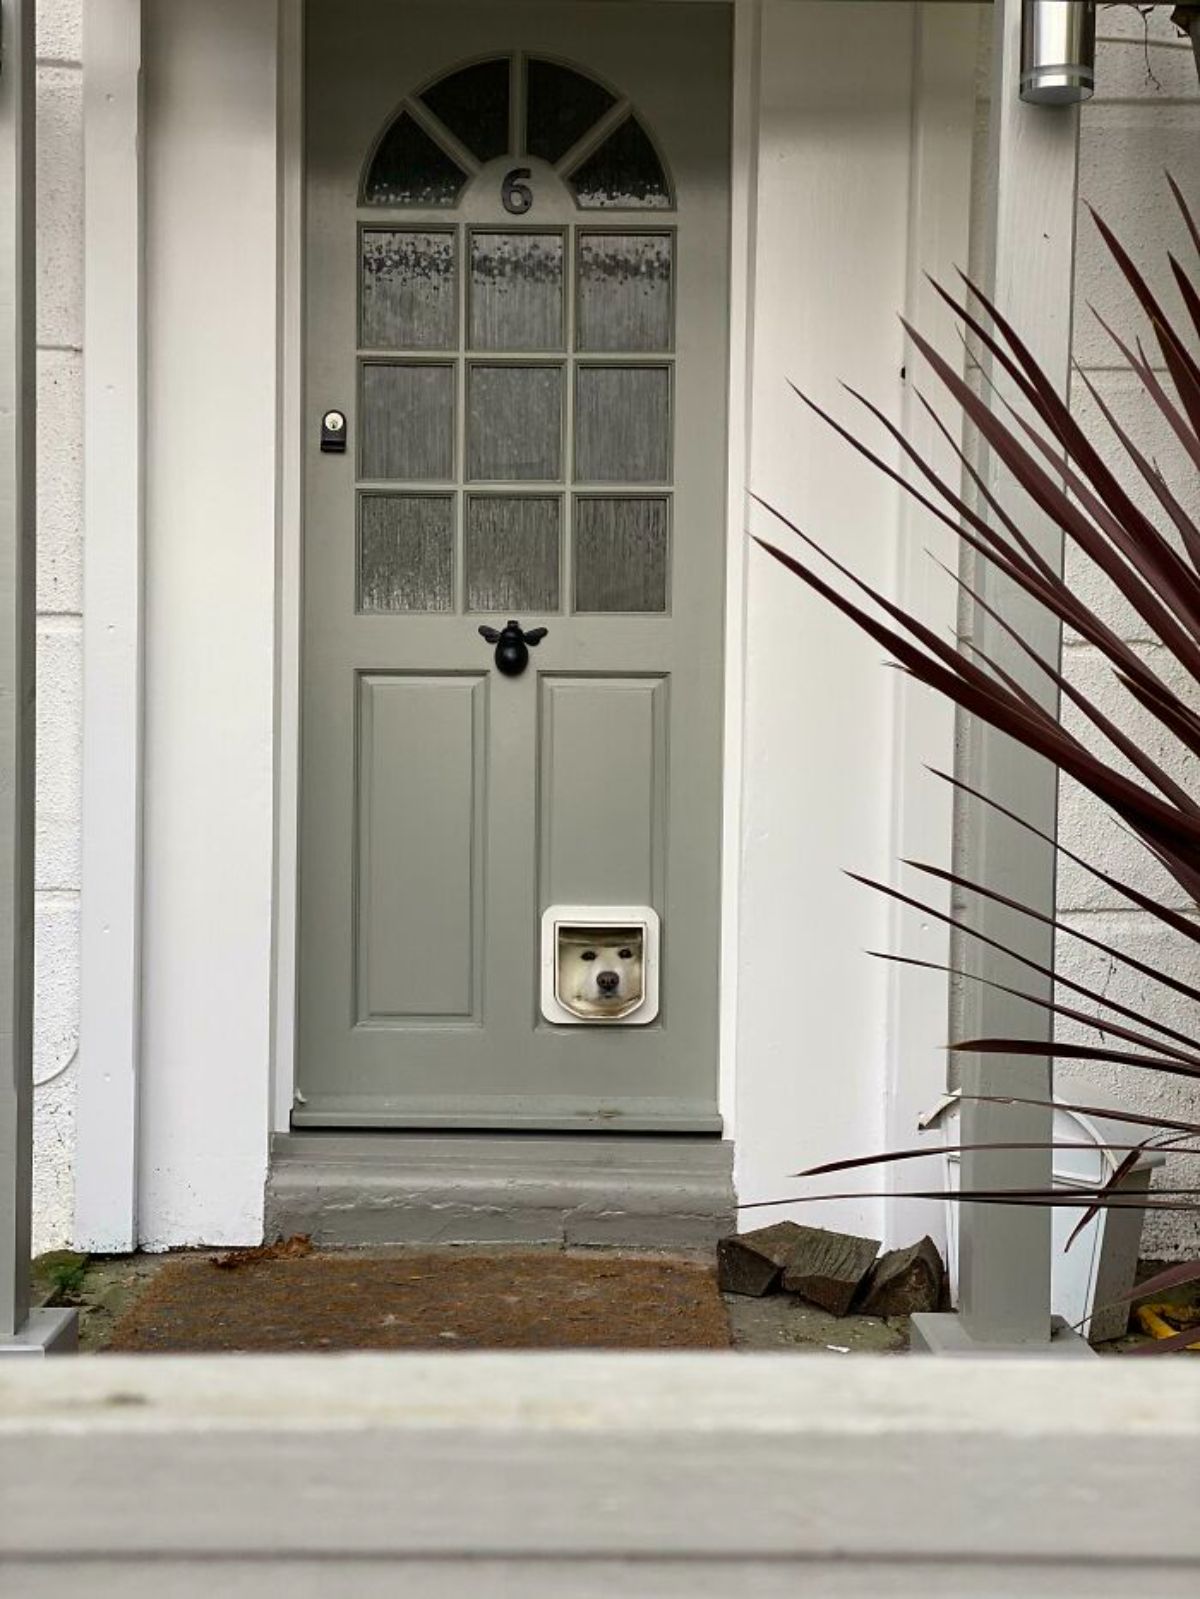 white dog's face looking through a cat door on a grey front door